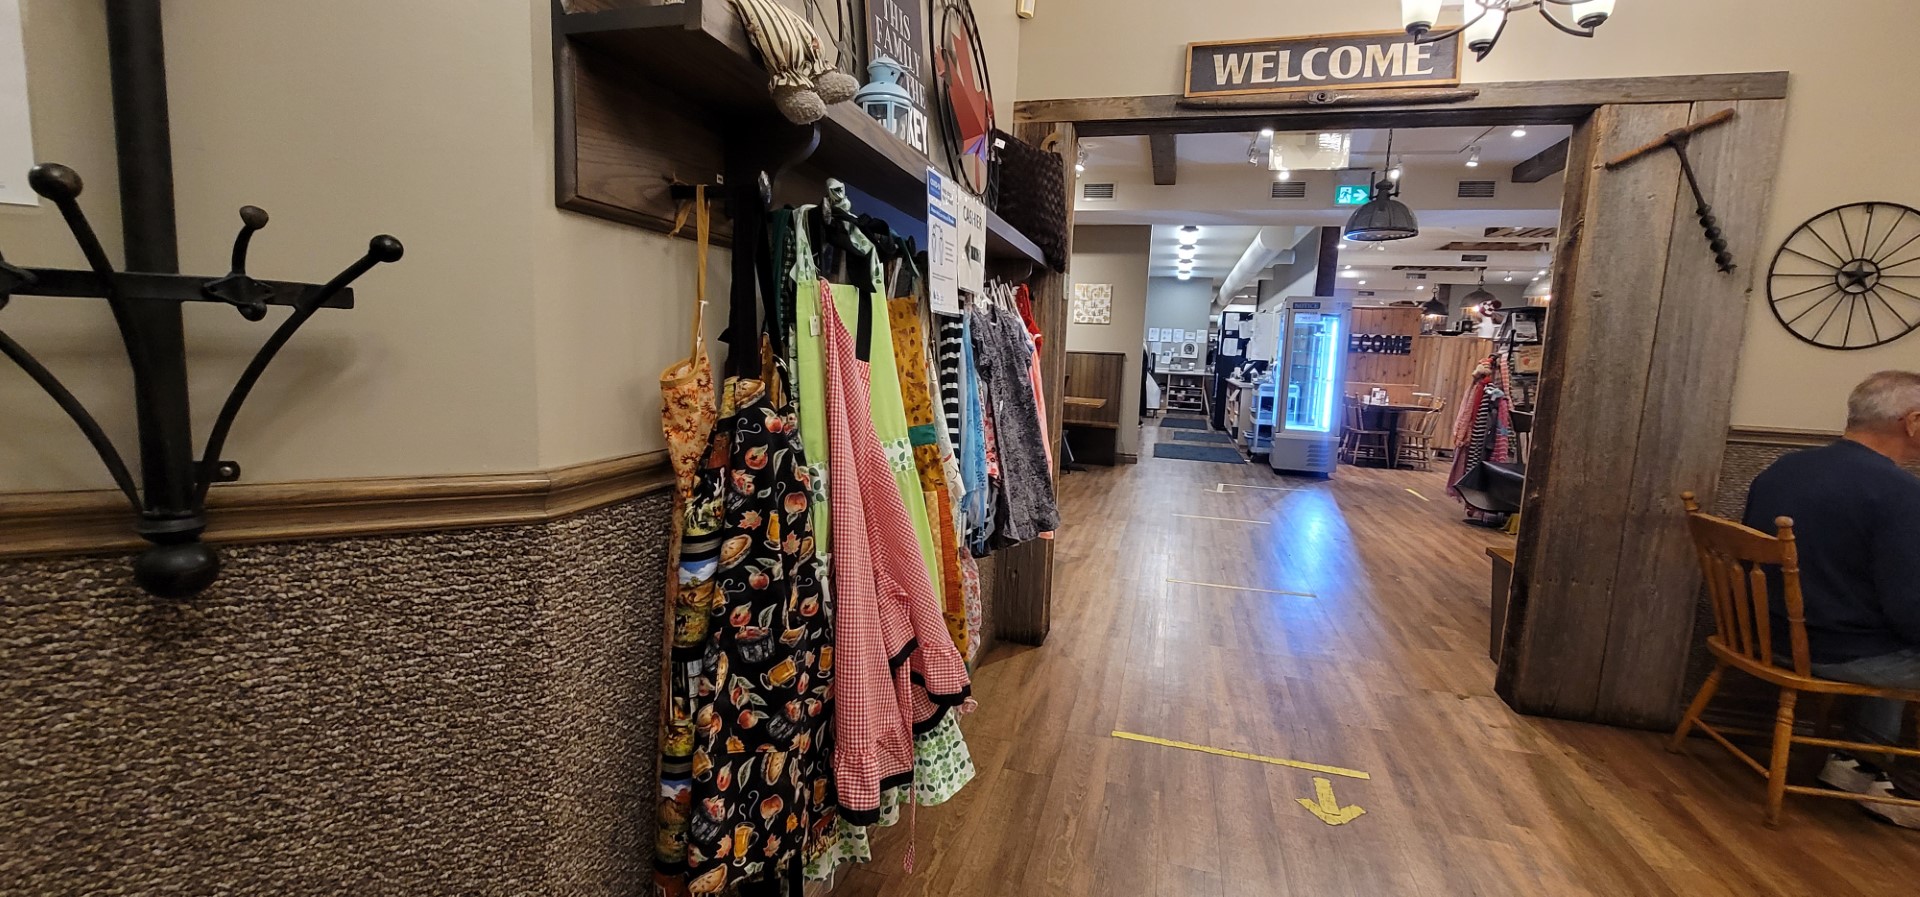 clothes hanging at Mennonite restaurant